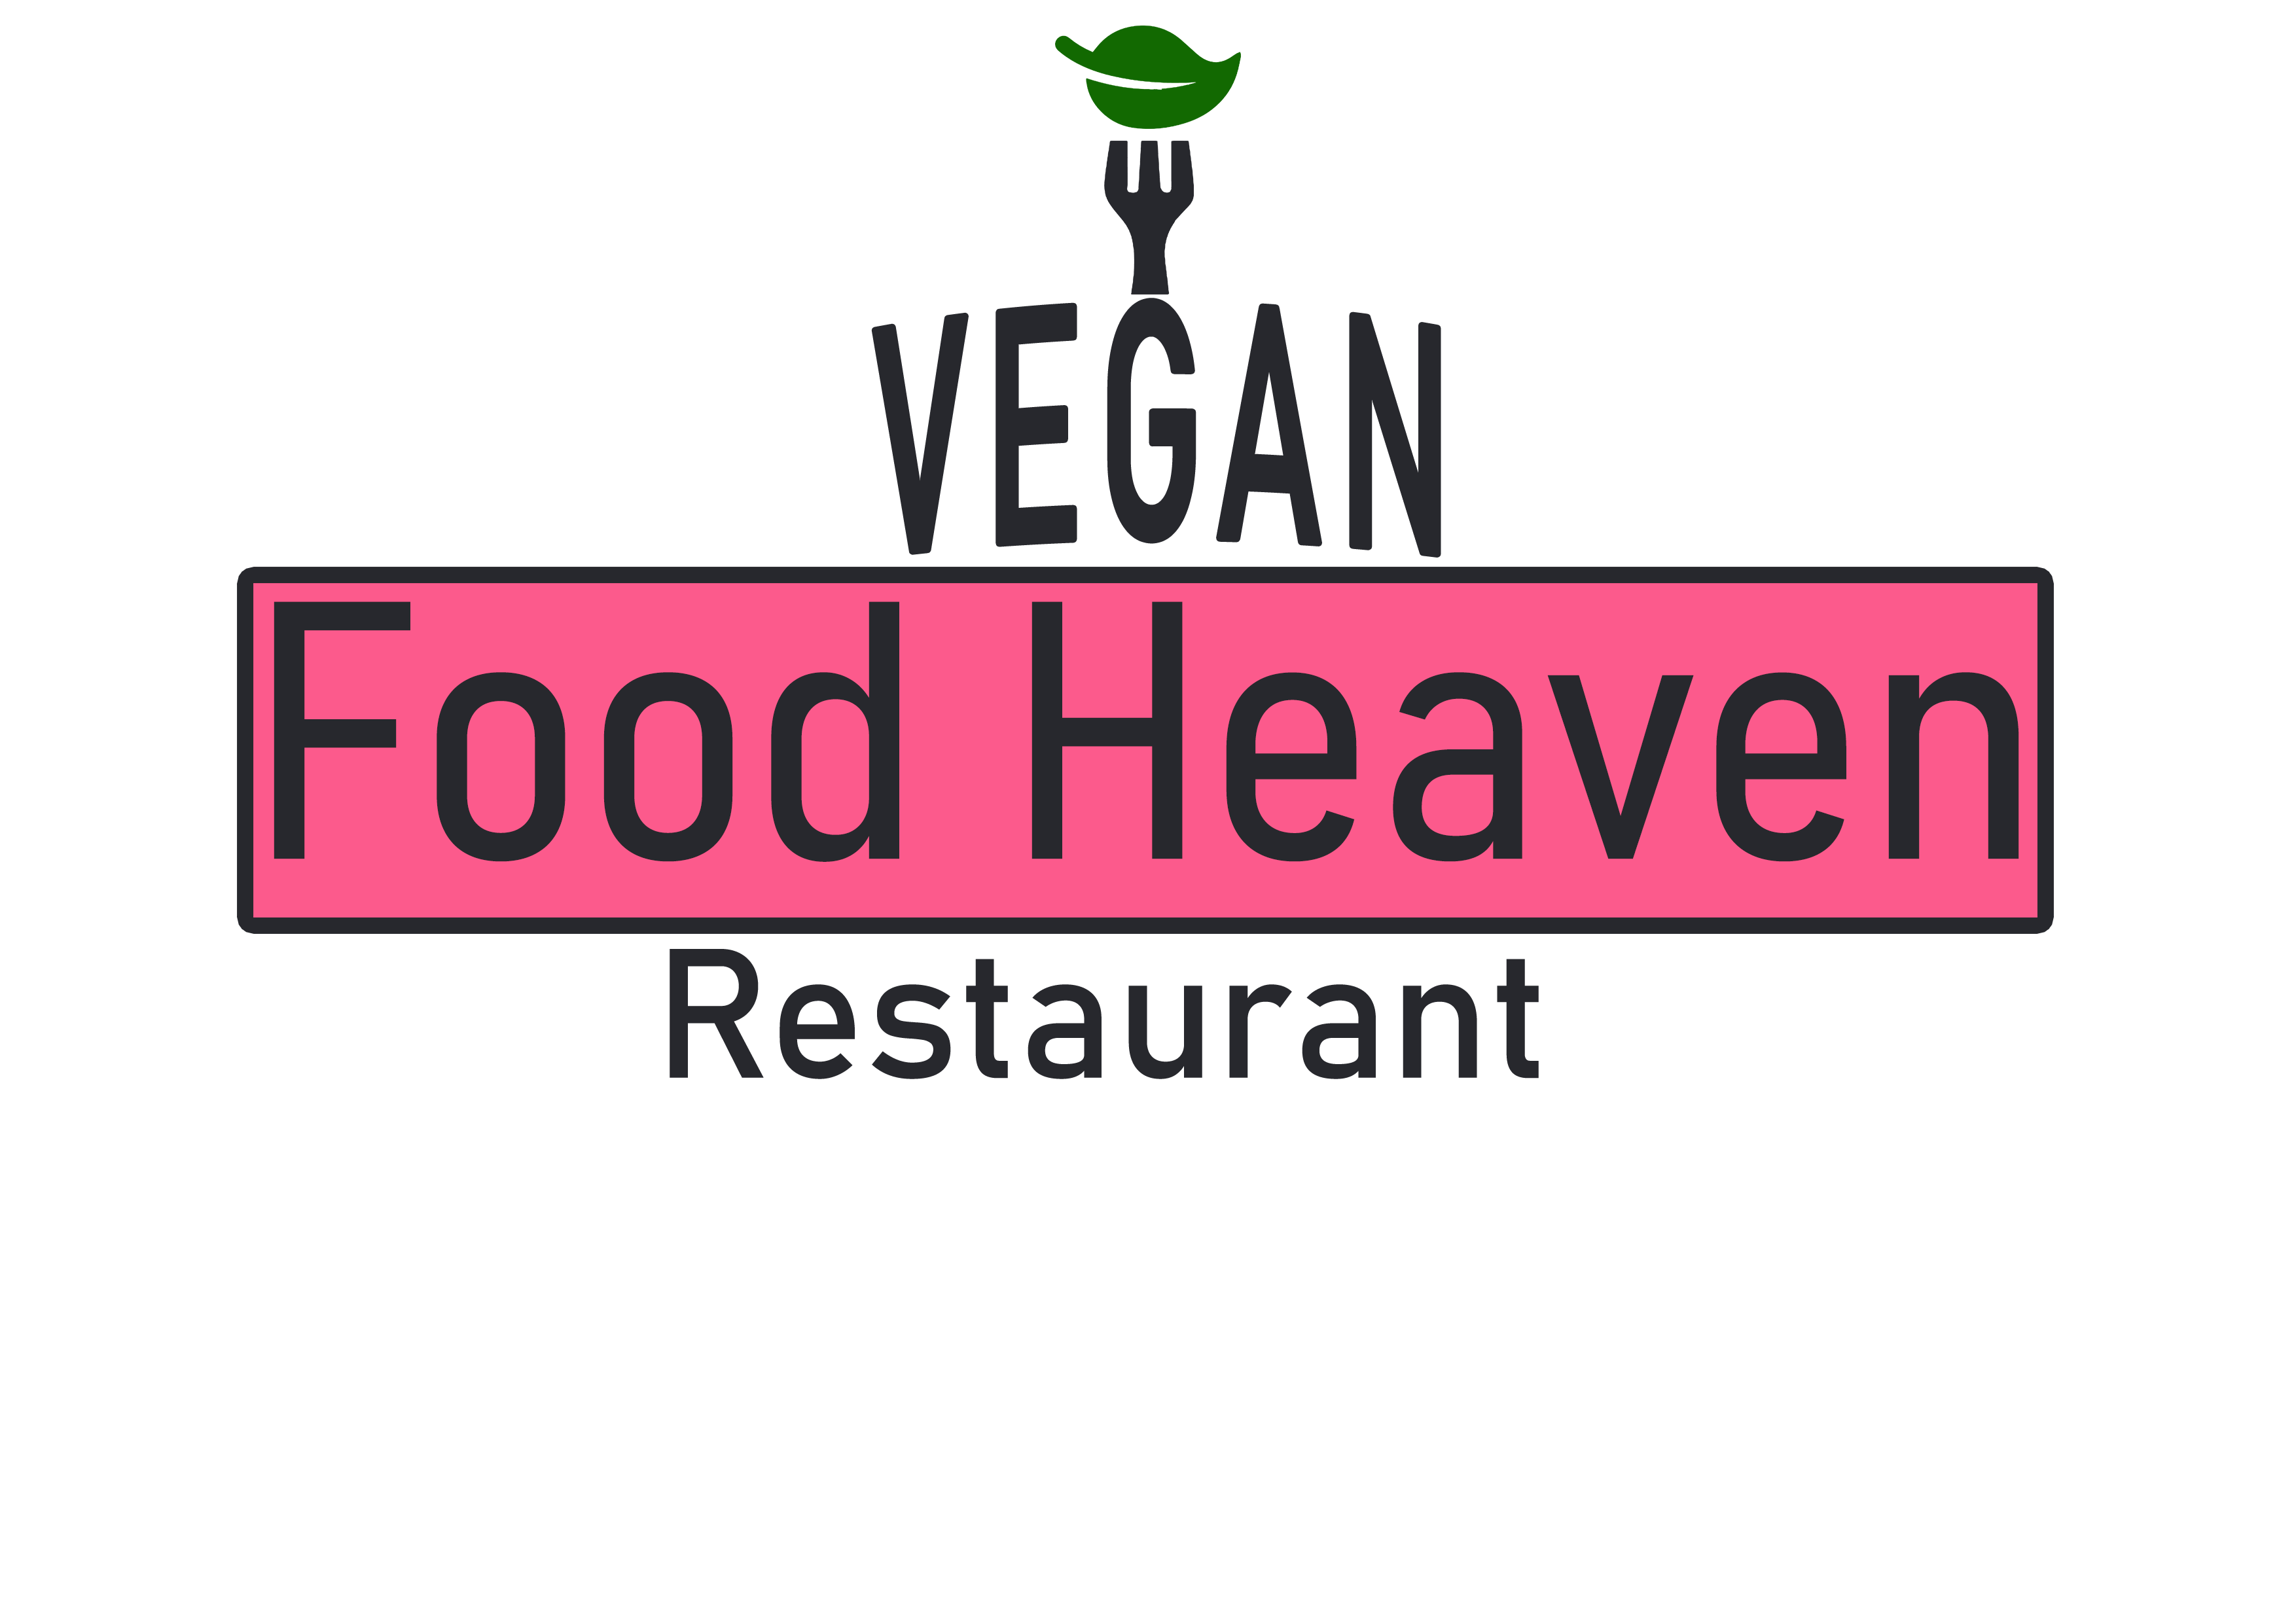 veganfoodheaven